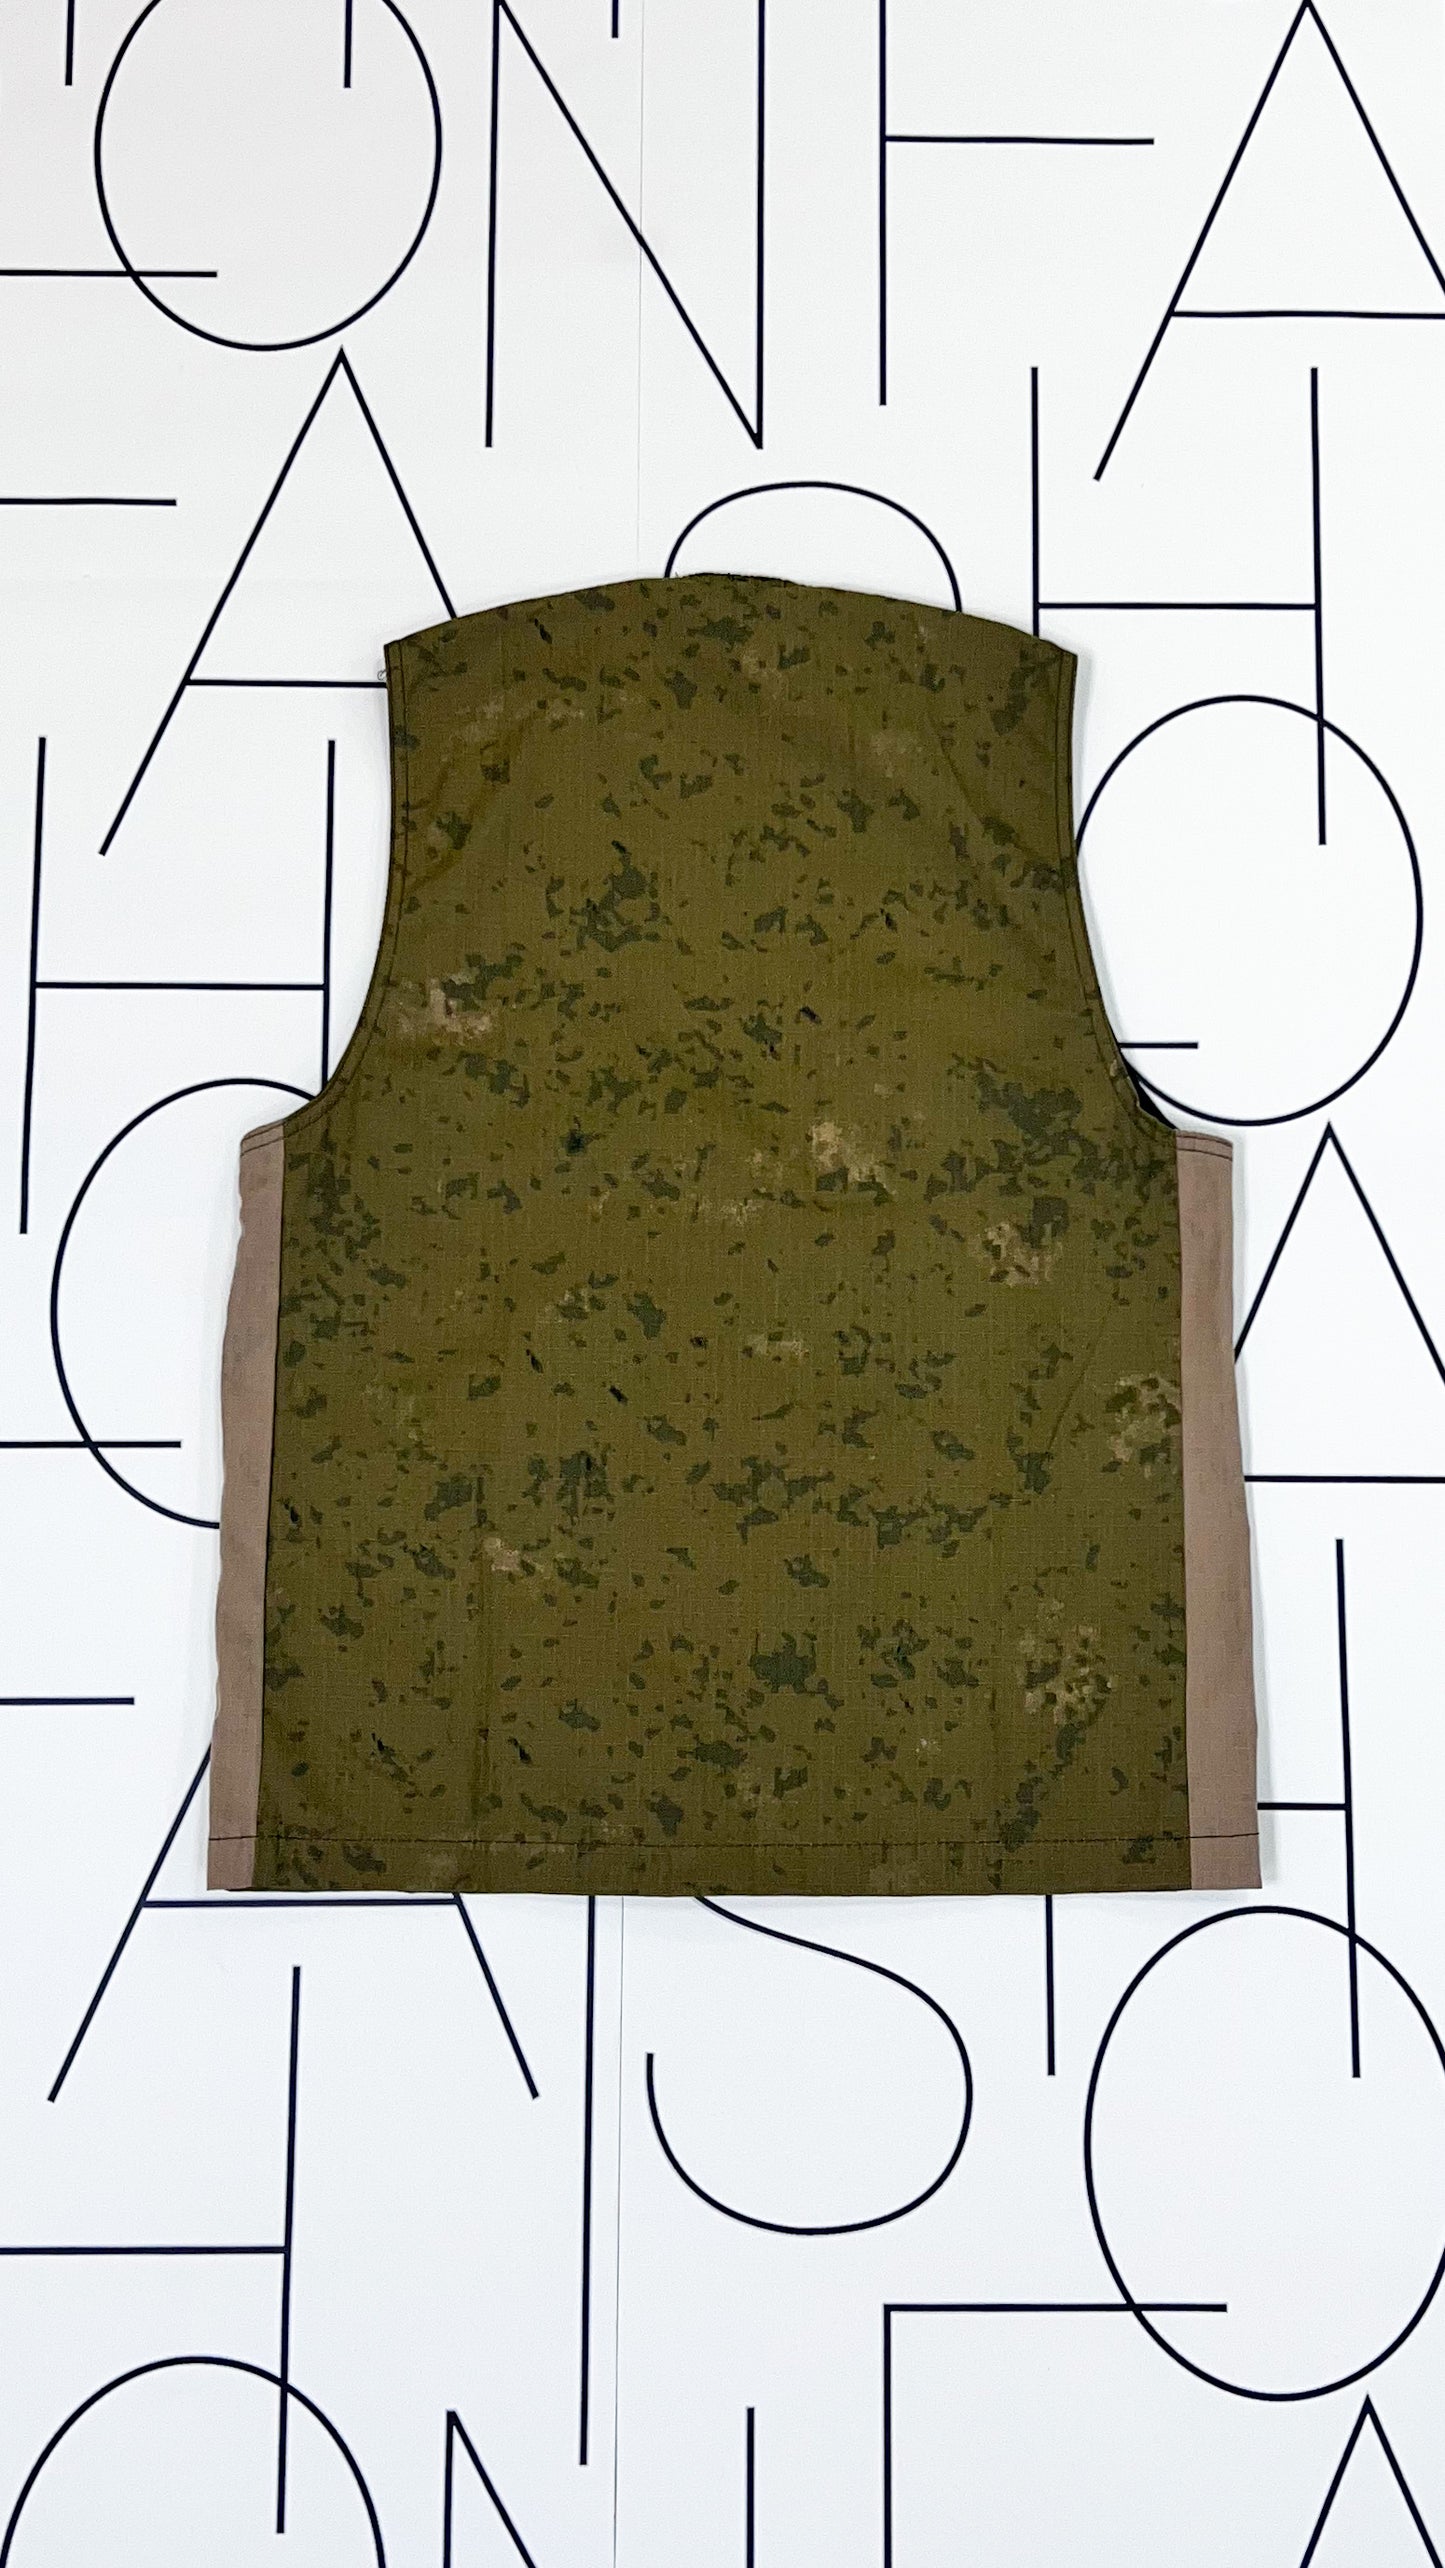 Camouflage Vest (MEN)